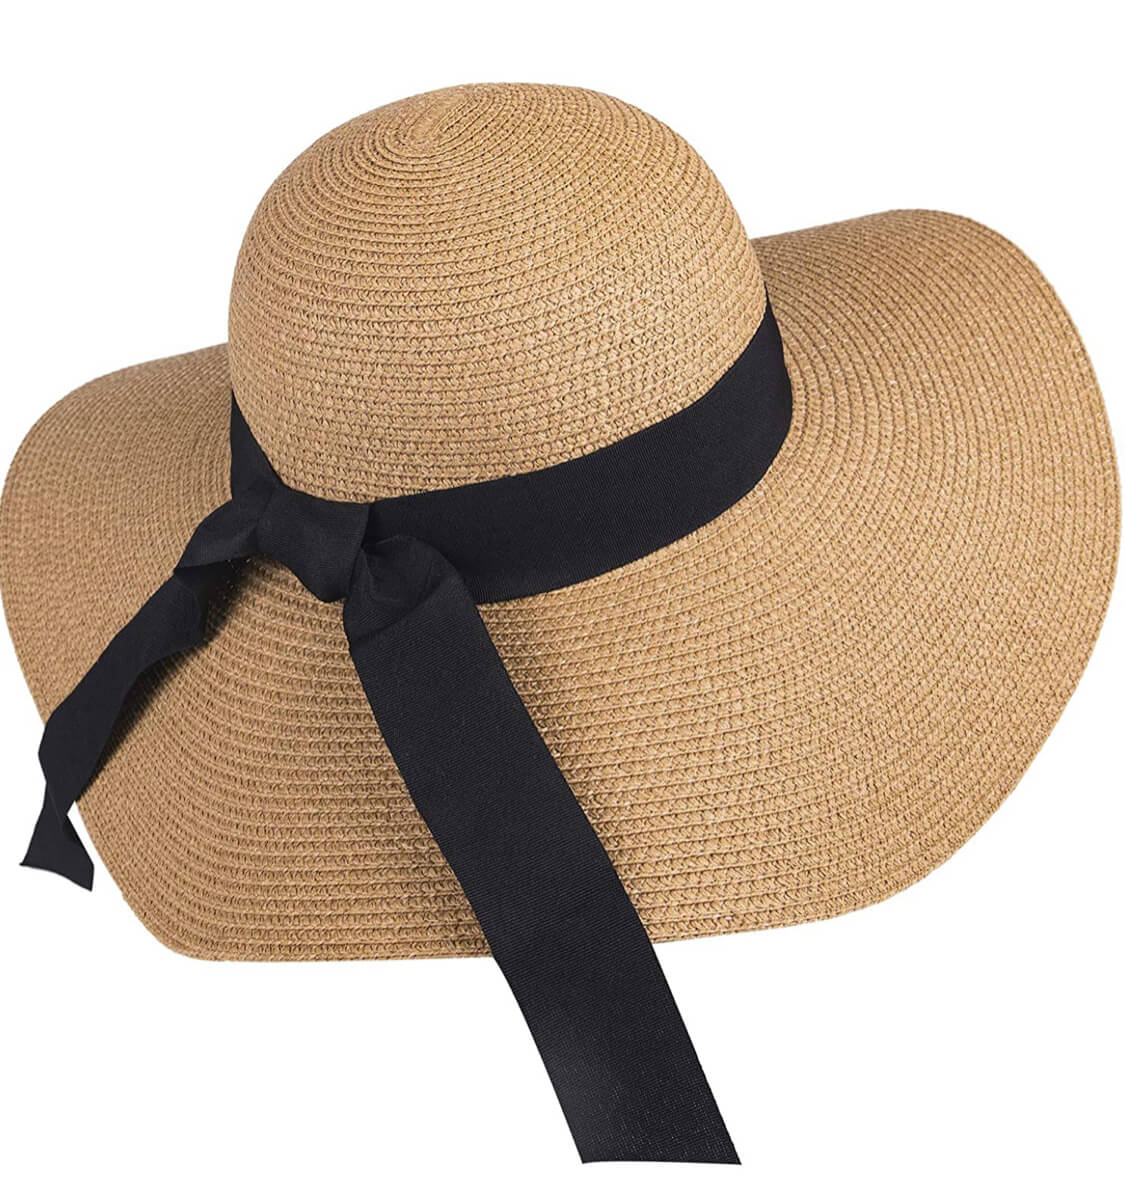 sun hat for the beach